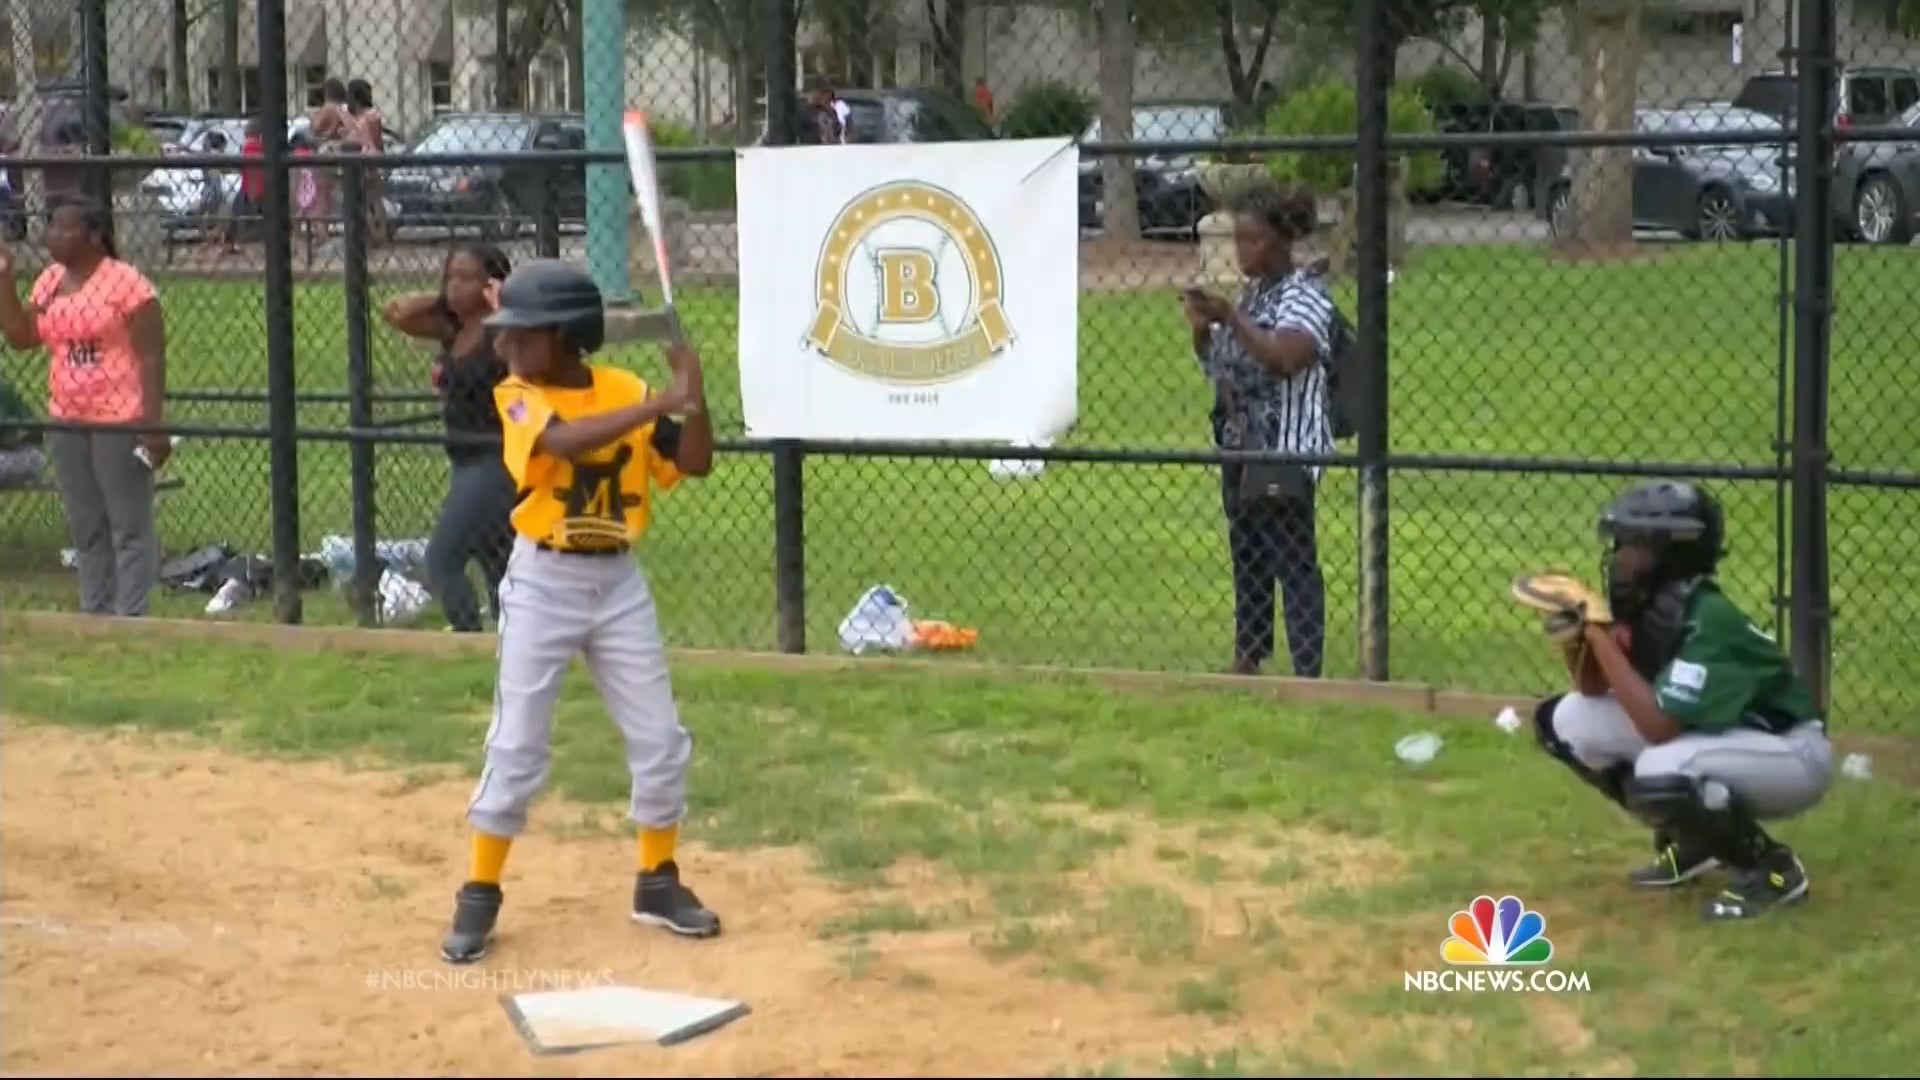 NBC | Nightly News | Chicago Kids and Police Bond Through Baseball